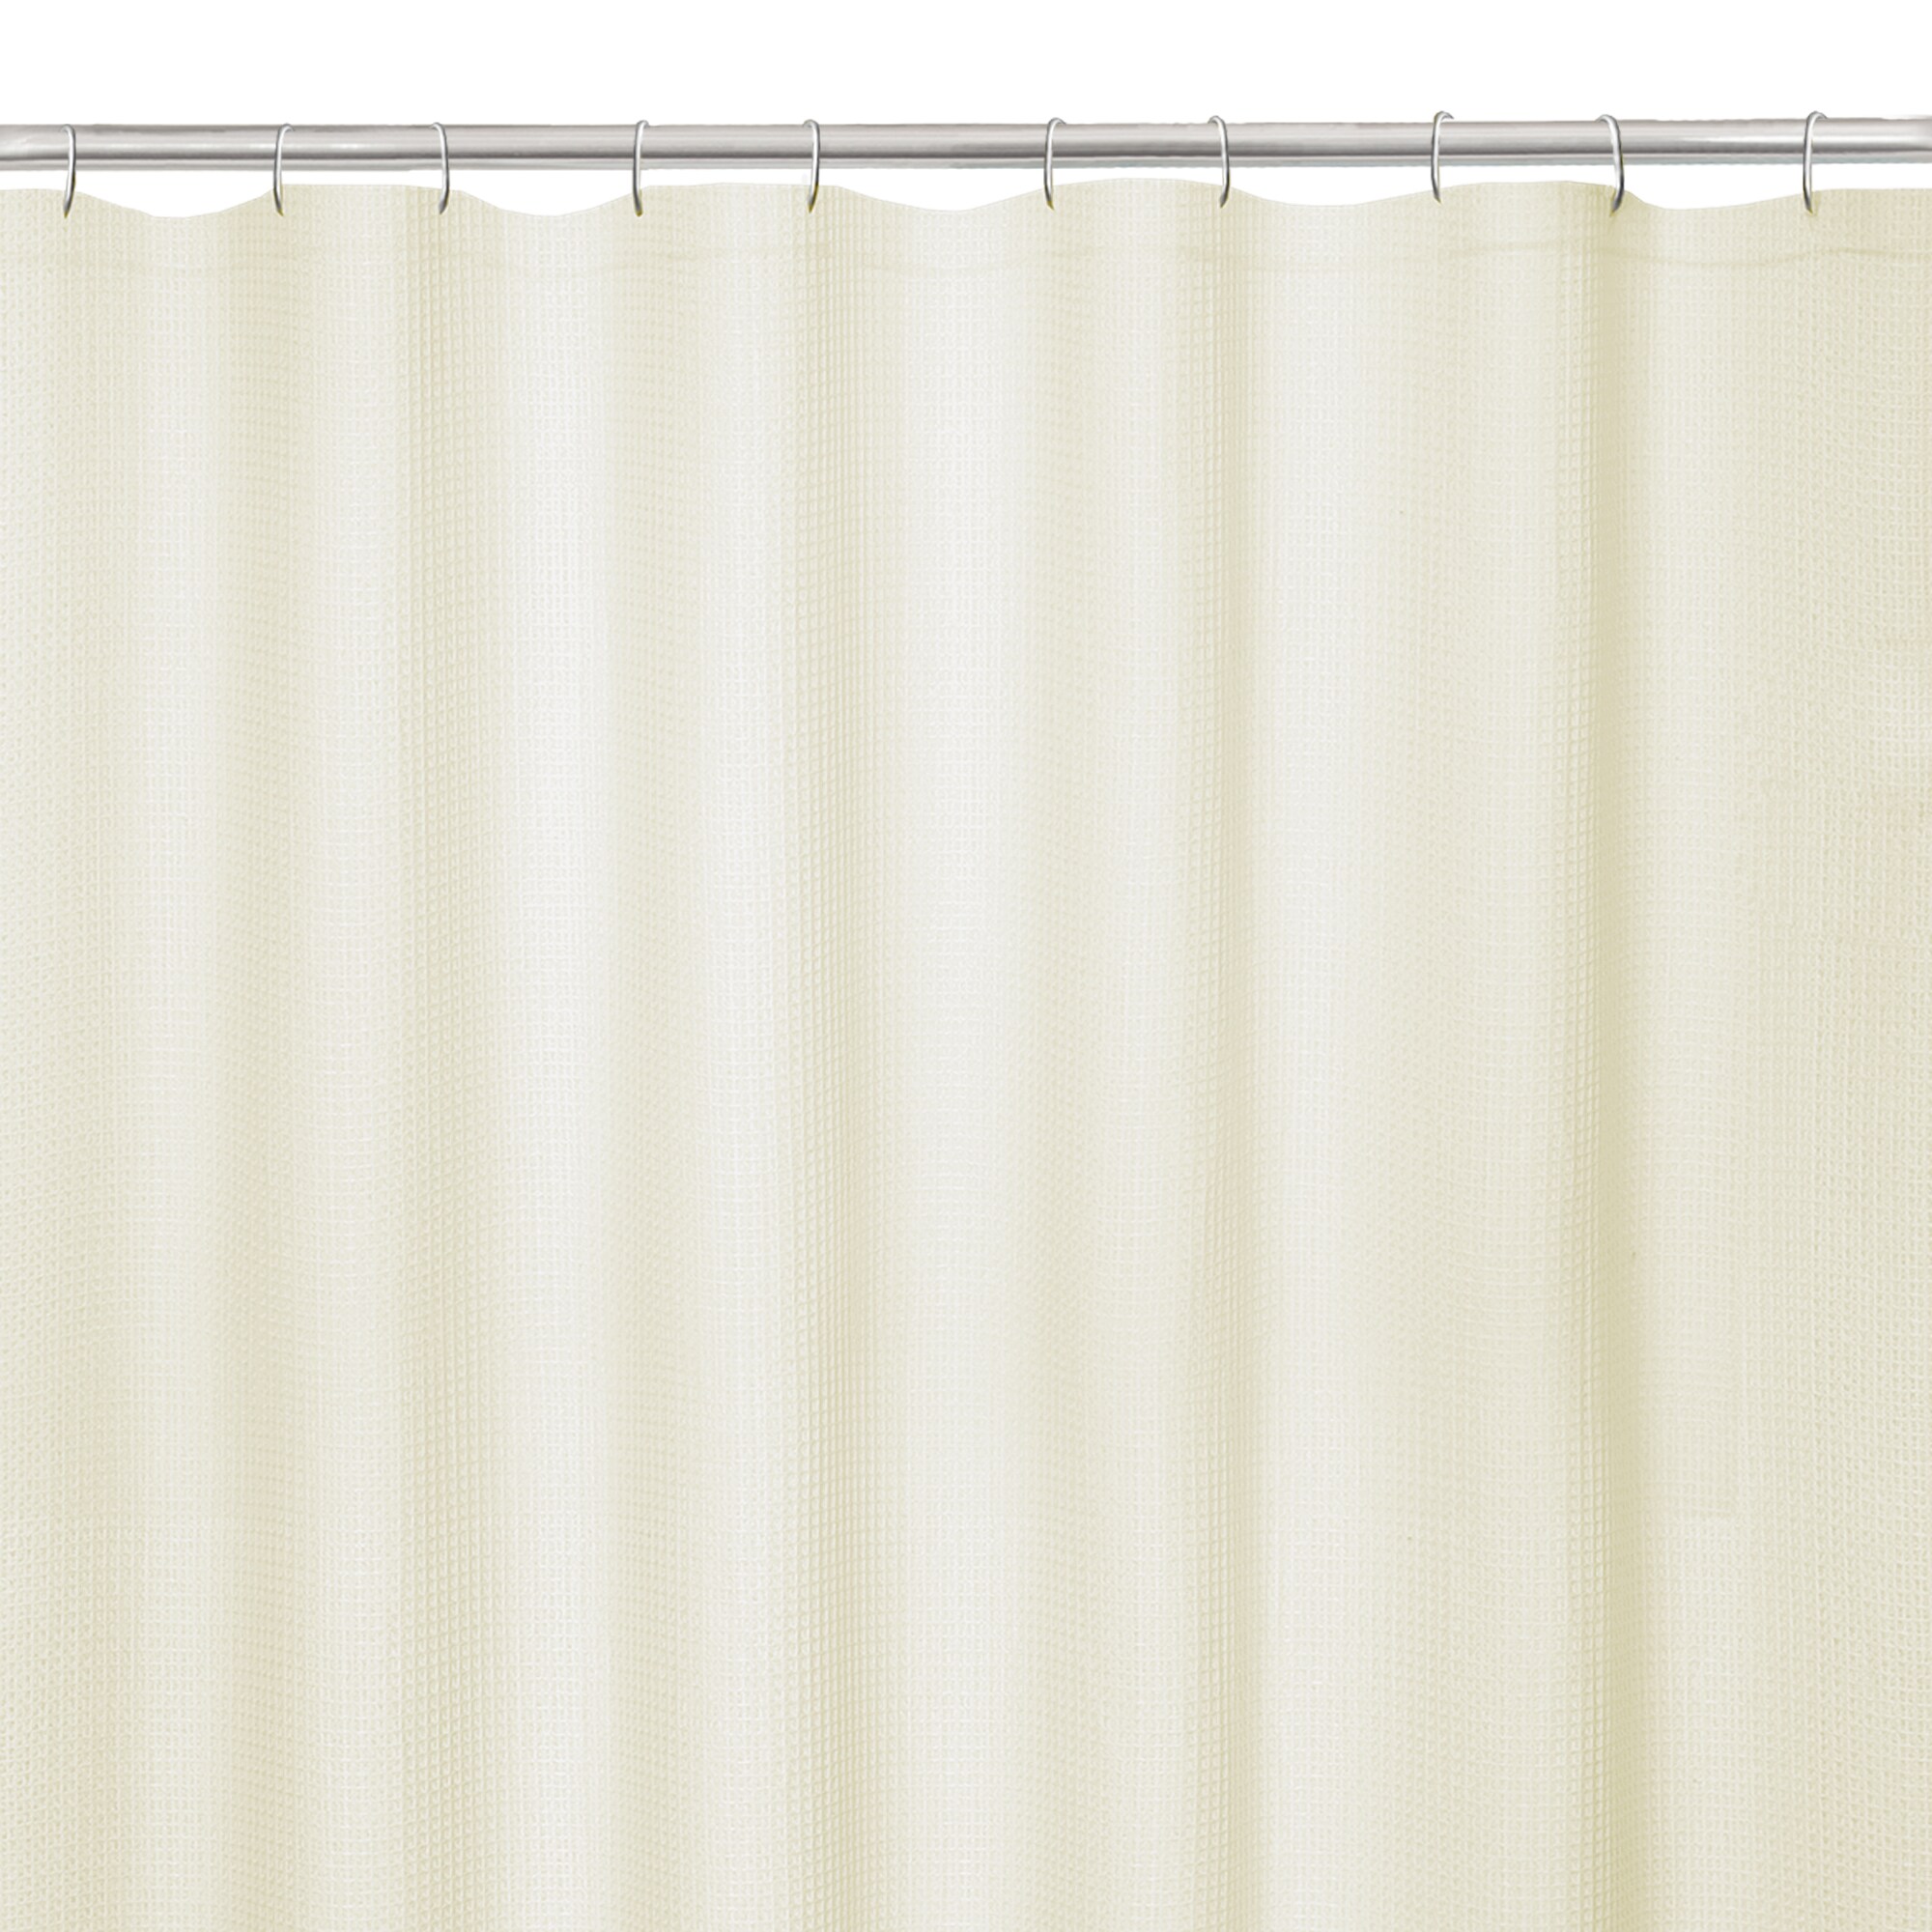 70 in Satin Stripe Hotel Fabric Shower Curtain x 72 in White or Cream Curtain 